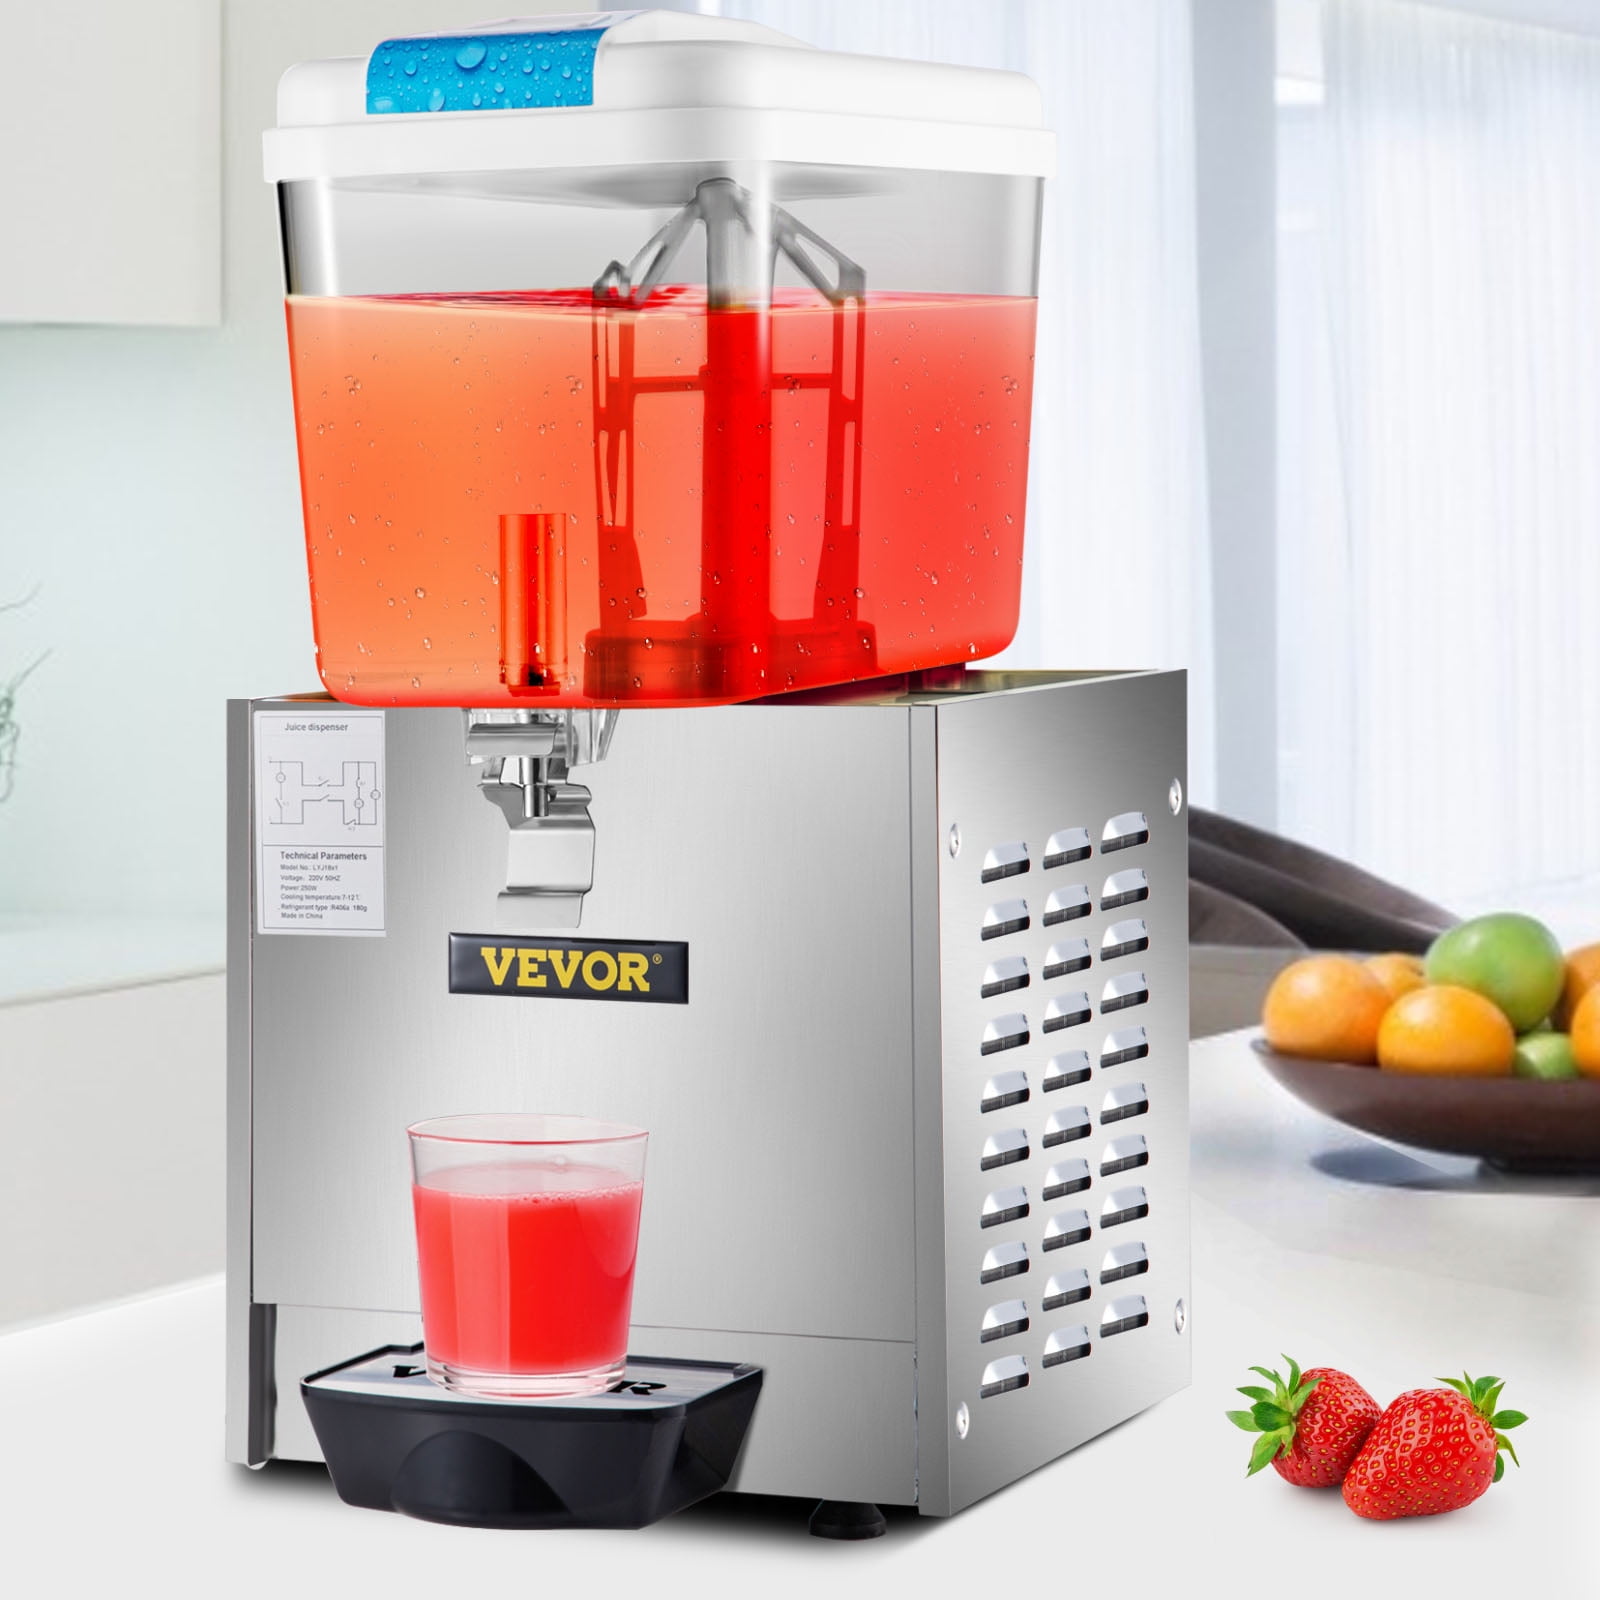 VEVOR 110V Commercial Beverage Dispenser,14.25 Gallon 54L 3 Tanks